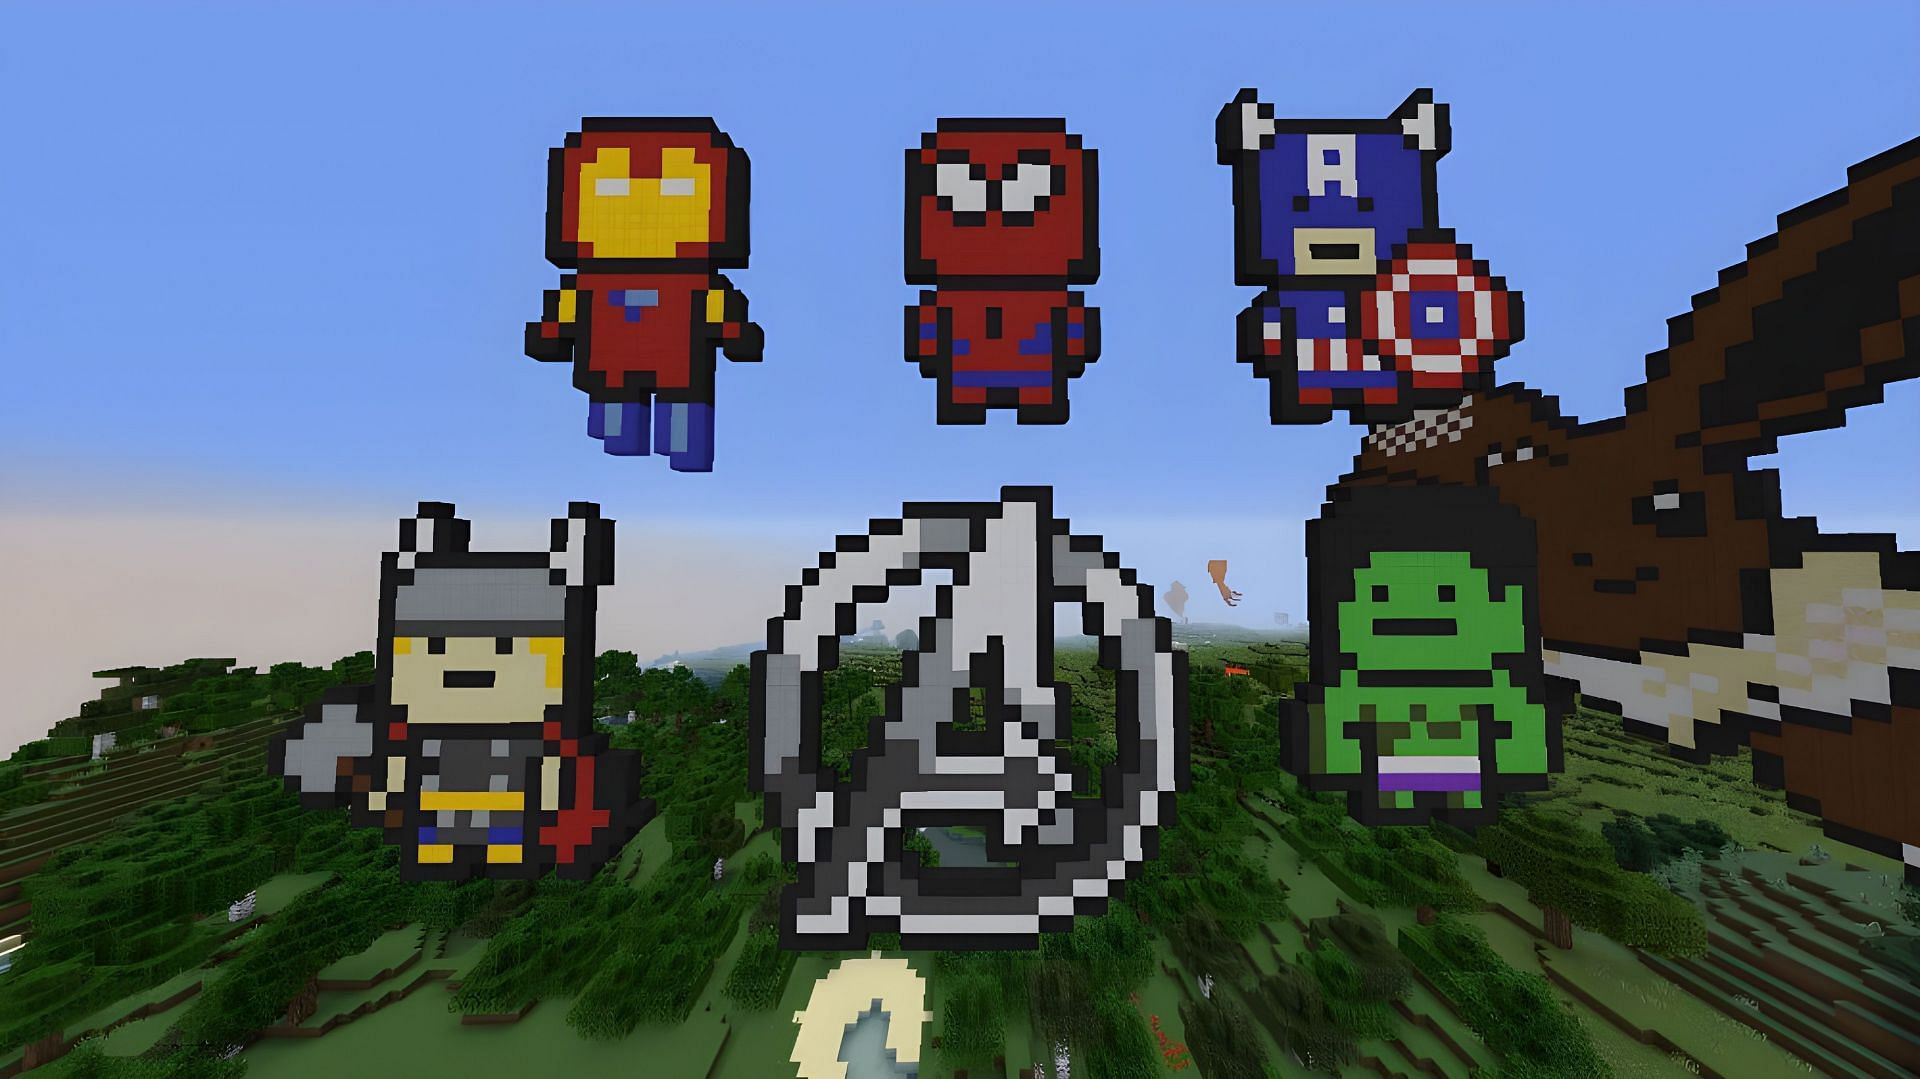 Minecraft pixel art is some of the best builds (Image via Reddit/u/GatorMast3r)